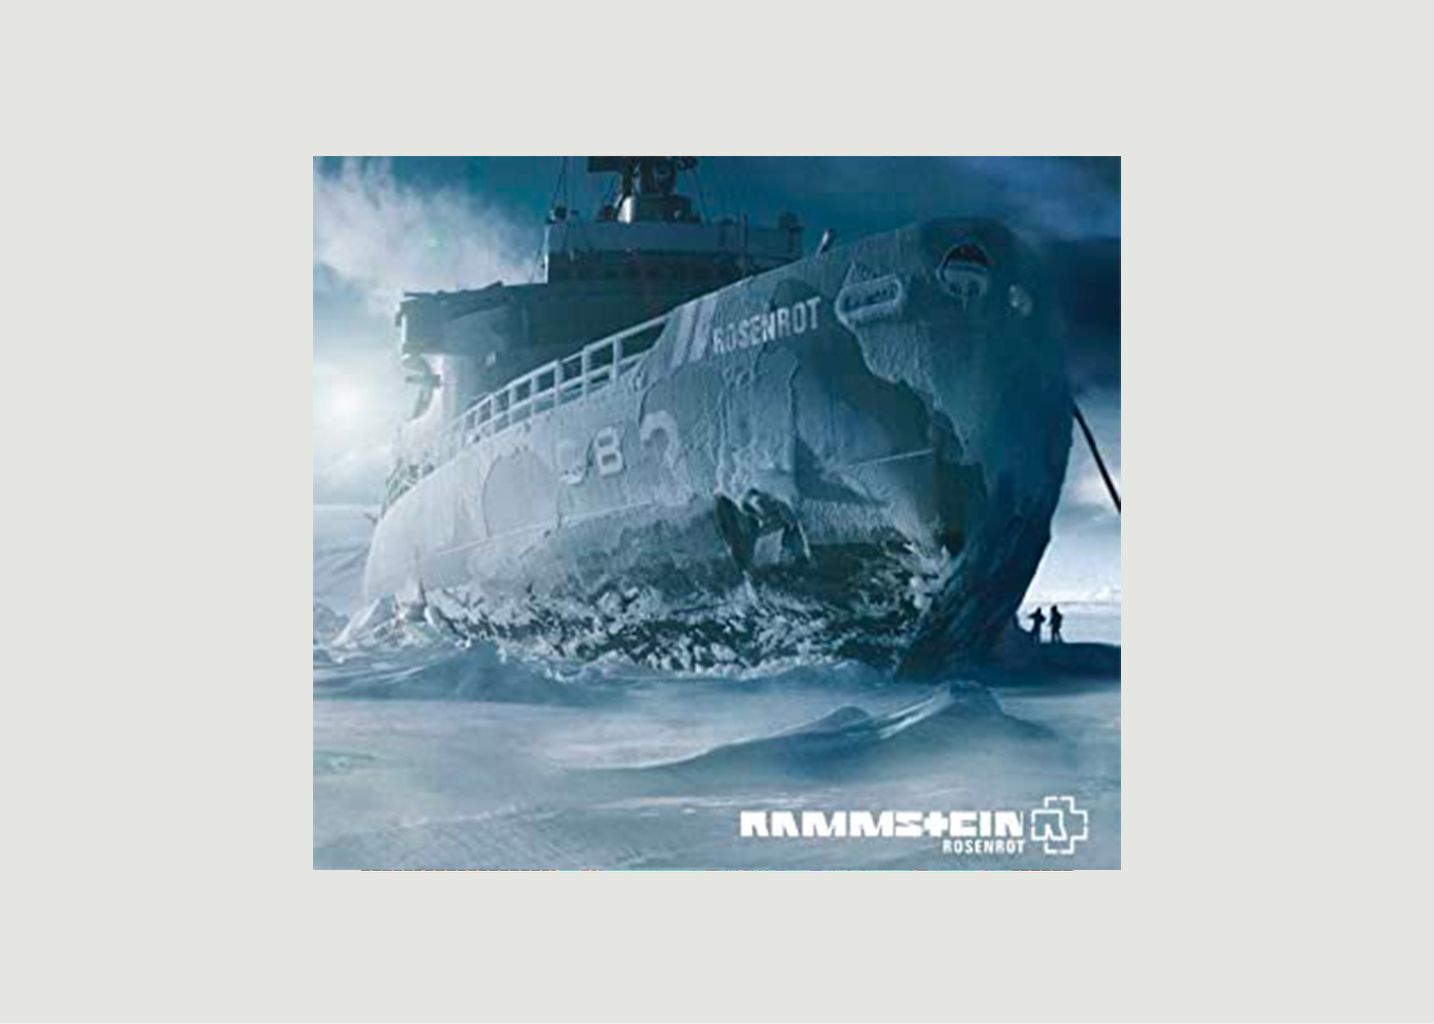 Rosenrot Rammstein Vinyl - La vinyl-thèque idéale